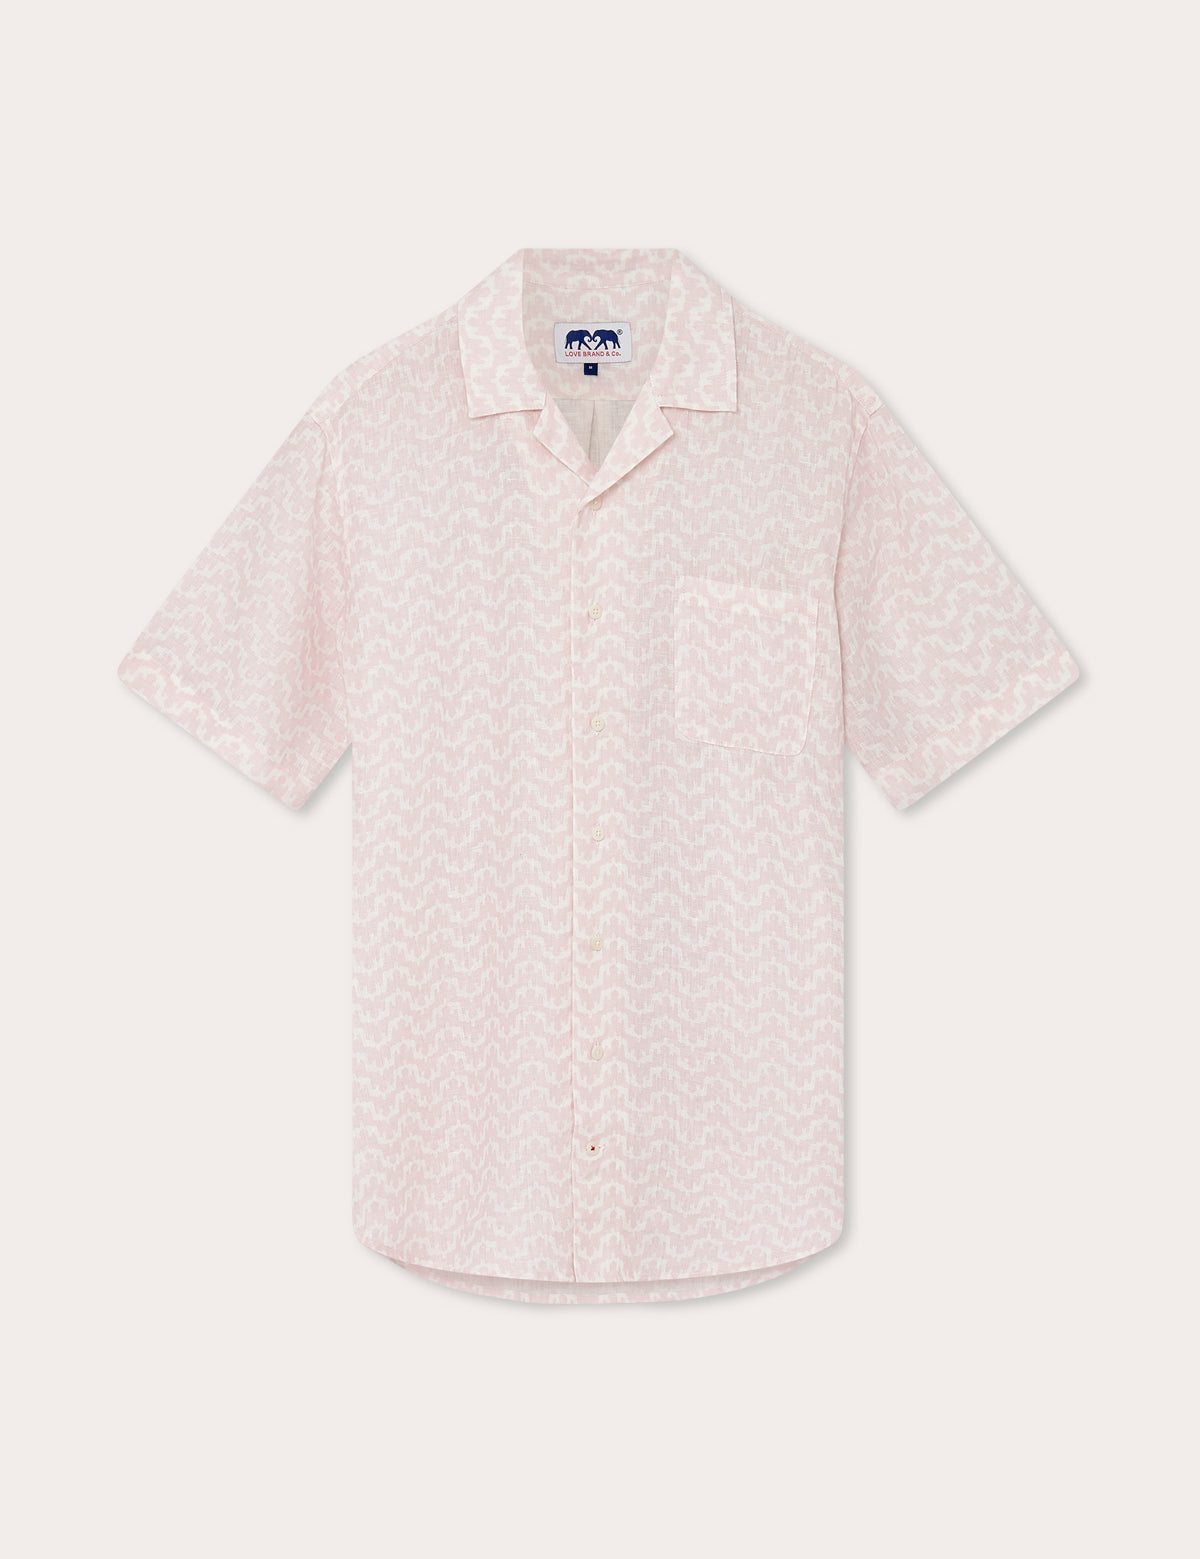 Men's Elephant Palace Pink Arawak Linen Shirt